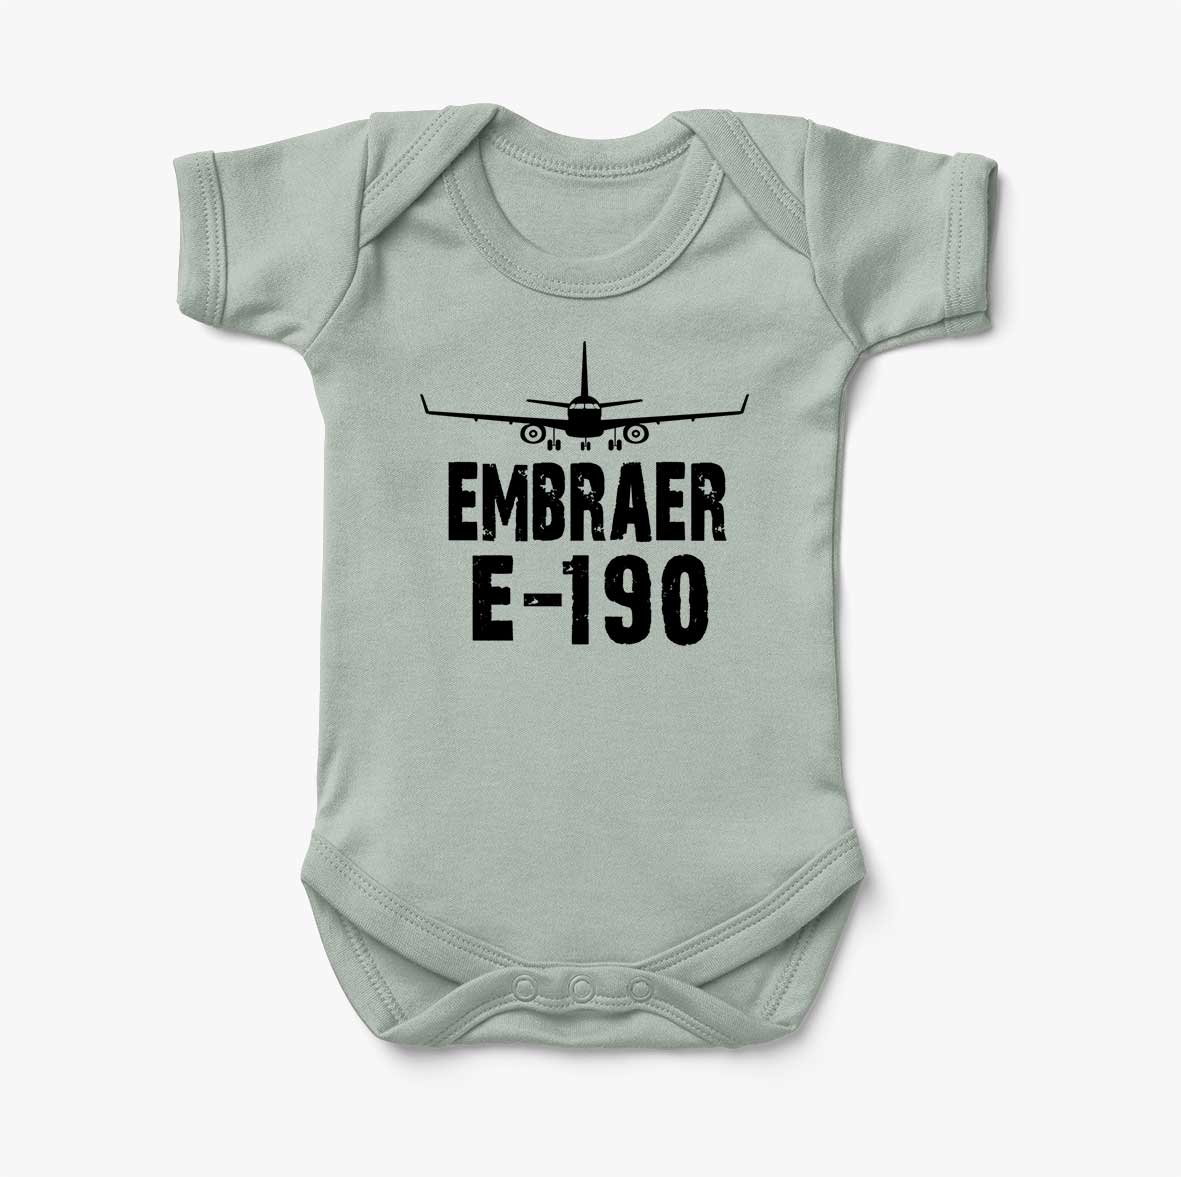 Embraer E-190 & Plane Designed Baby Bodysuits